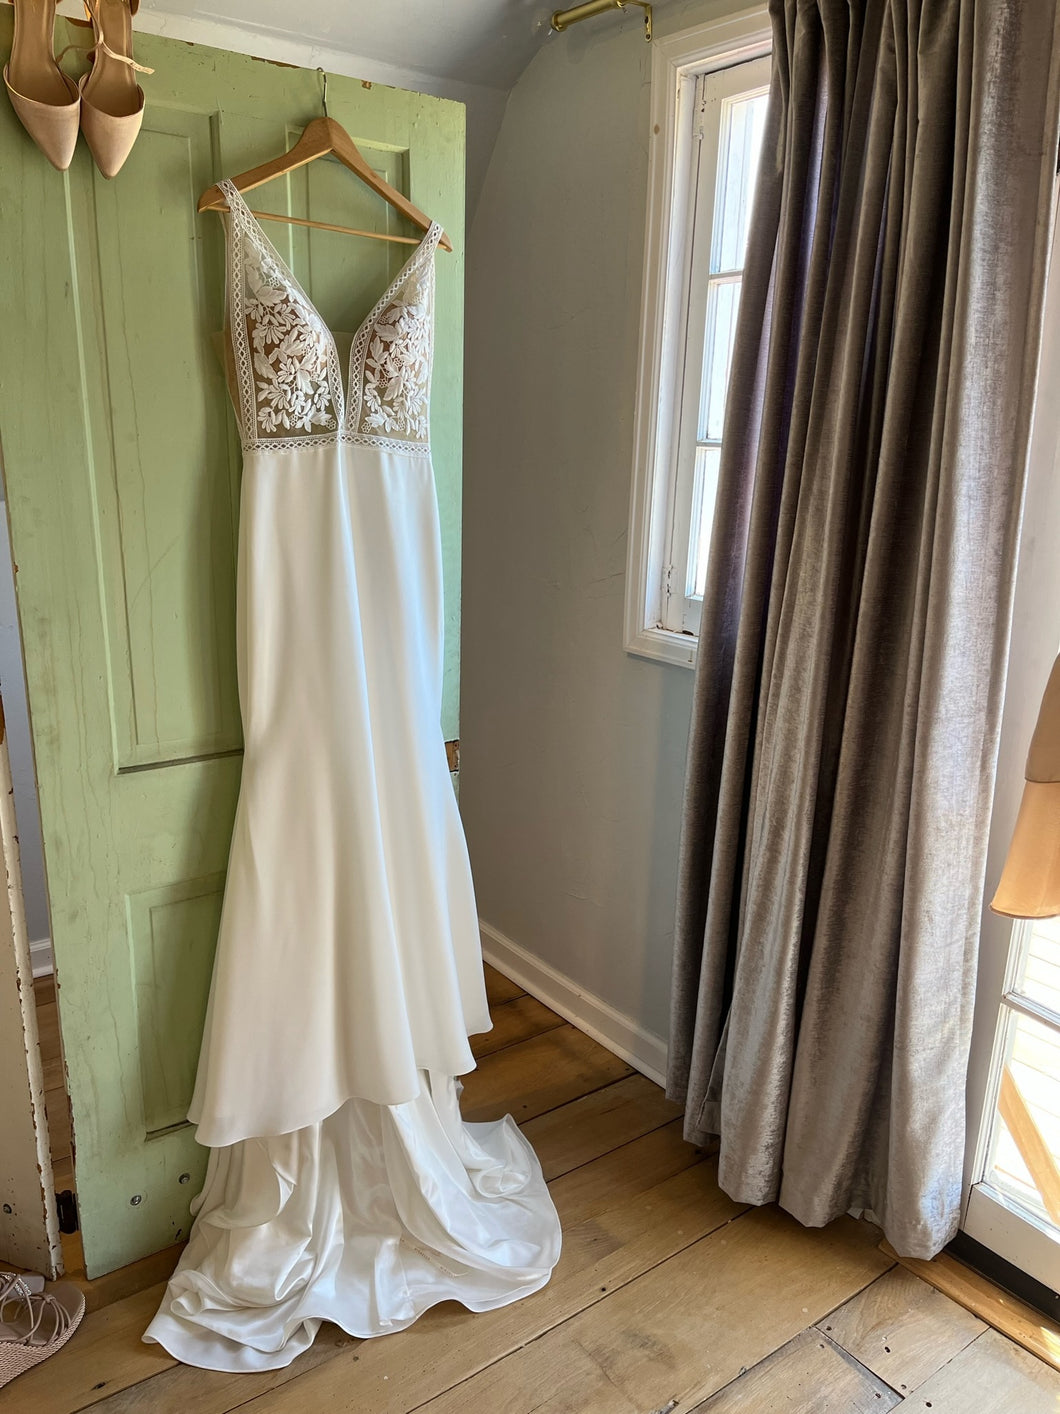 Mikaella '2297' wedding dress size-06 PREOWNED